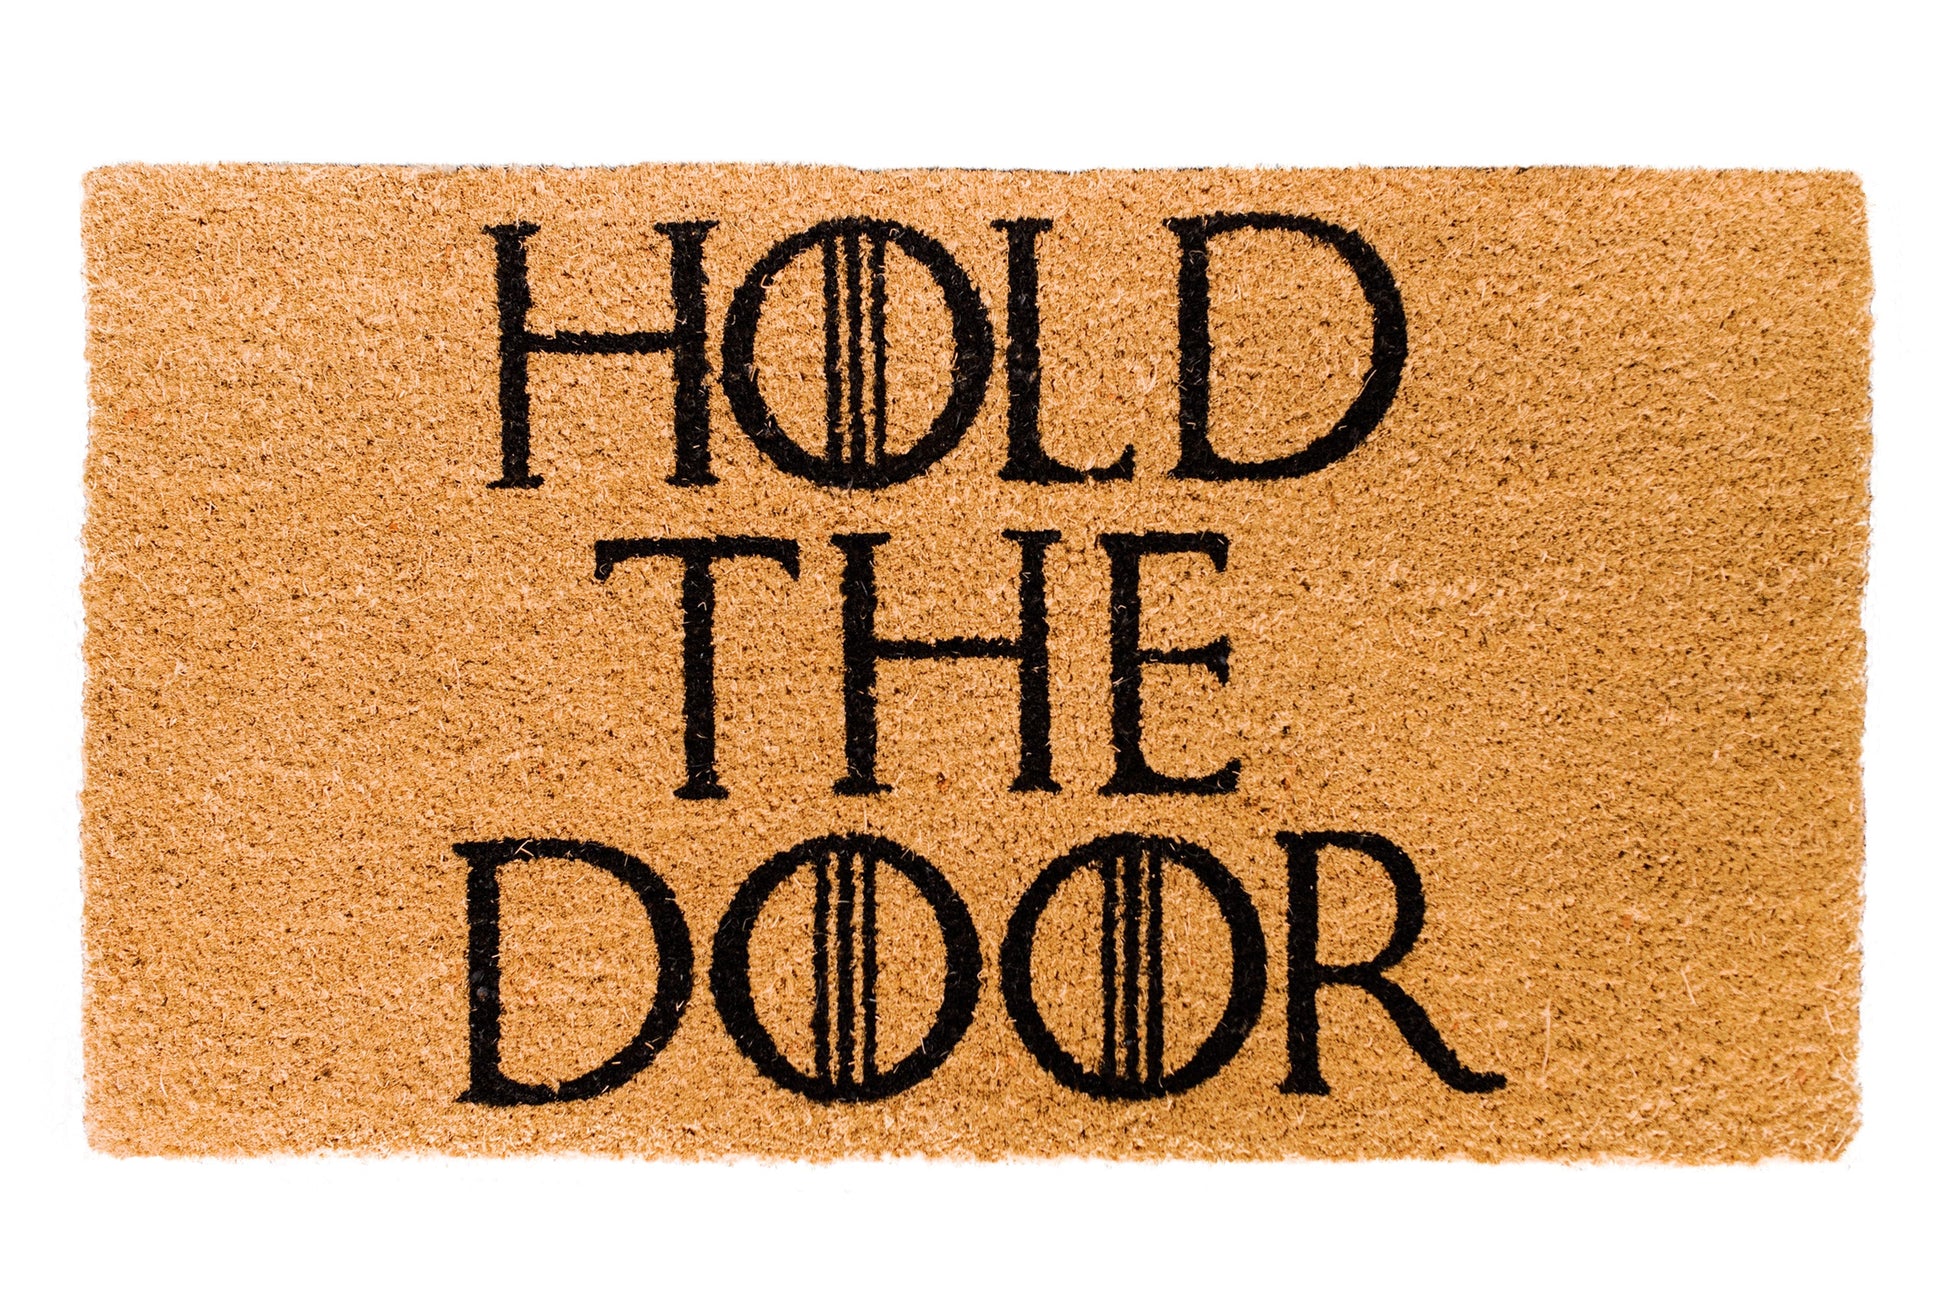 Theodore Magnus Natural Coir Doormat with non-slip backing - 17 x 30 - Outdoor / Indoor - Natural - Hold the Door